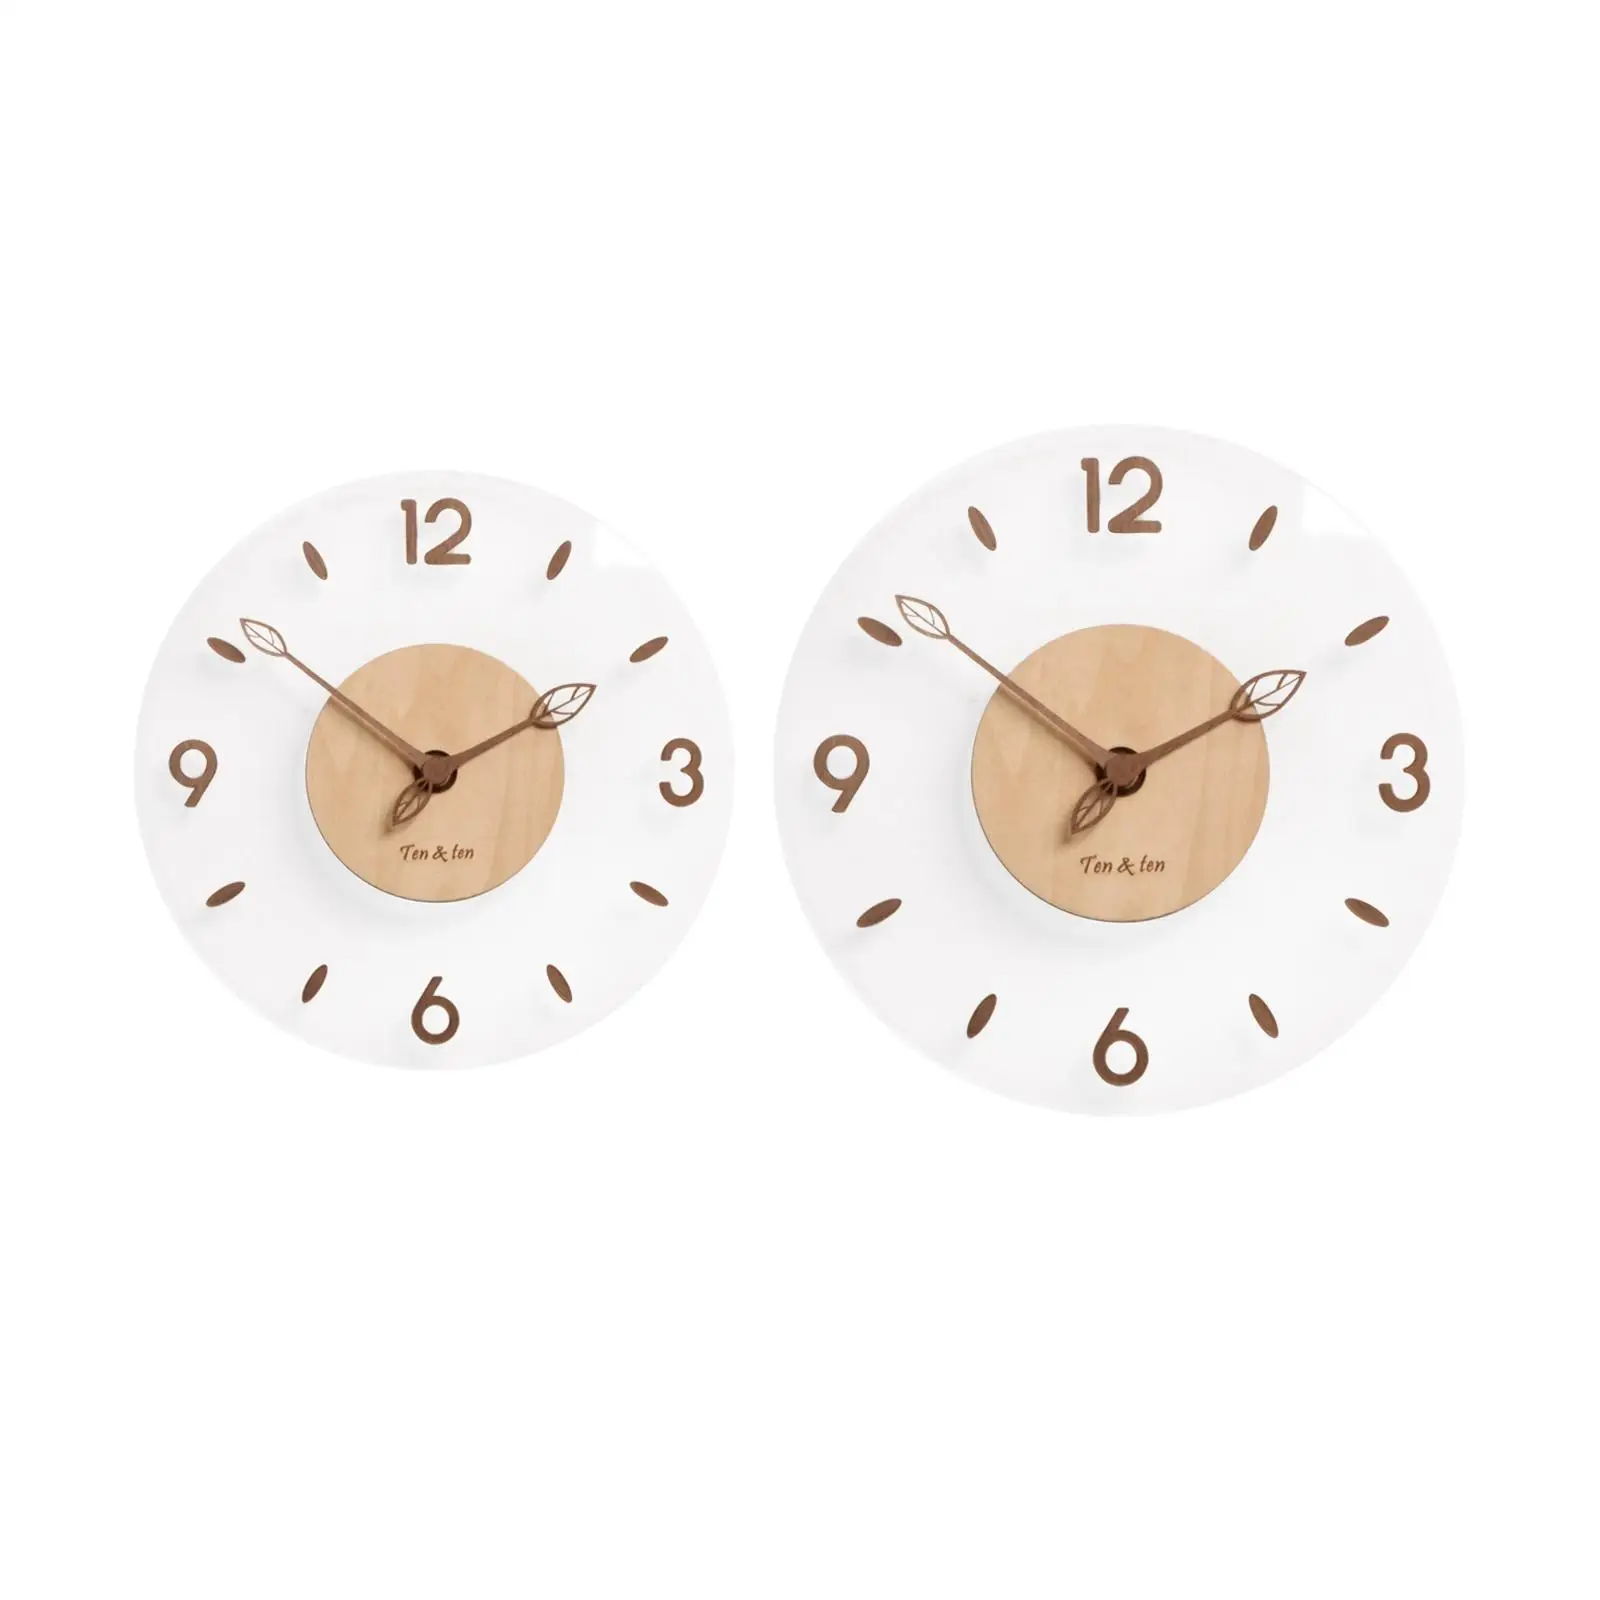 Modern Minimalist Acrylic Wall Clock Silent Decorative Round Wall Hanging Clocks for Cafe Bedroom Decor